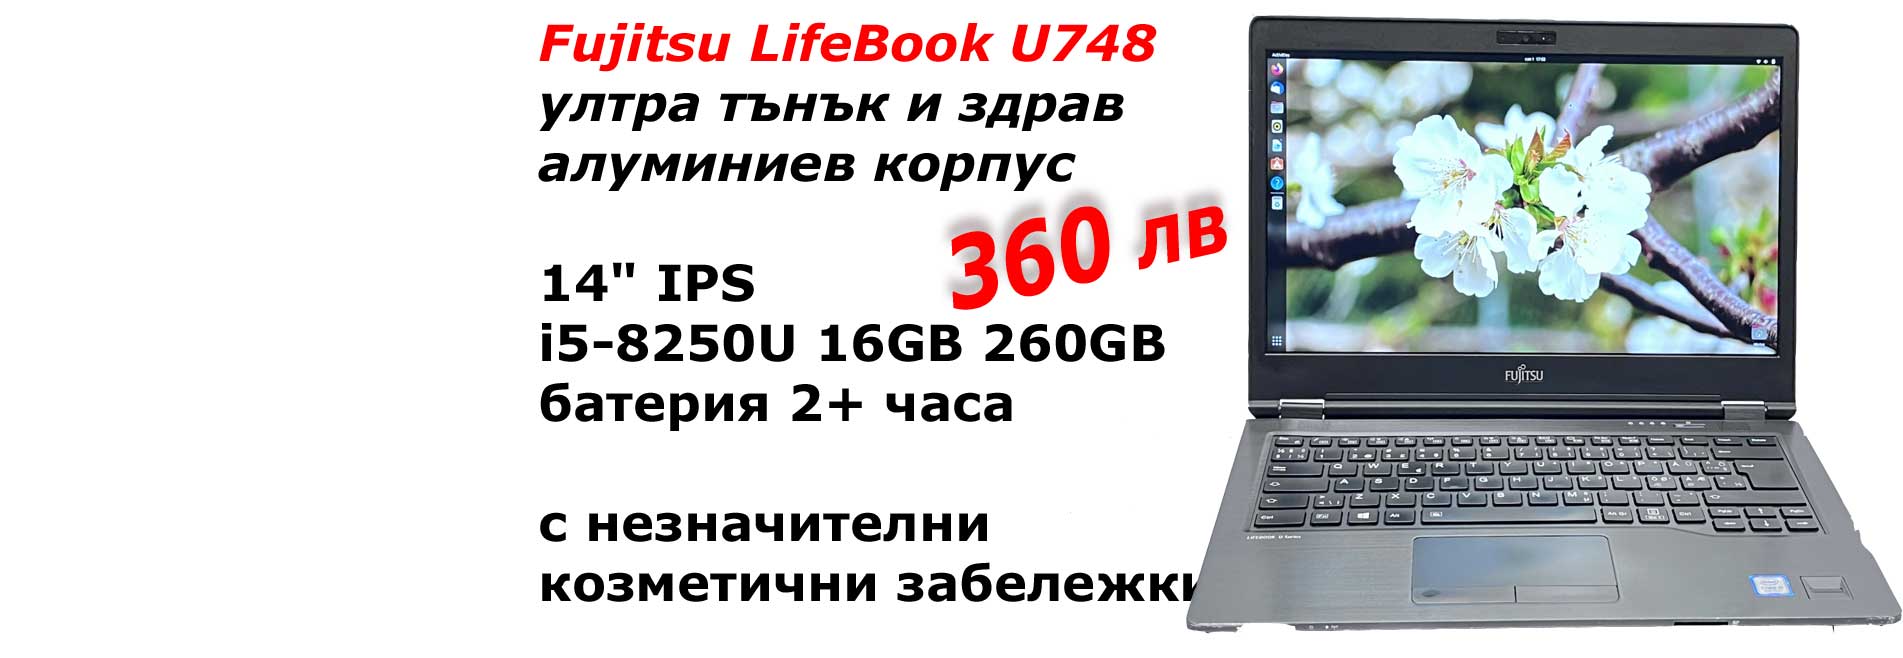 Fujitsu Lifebook u748